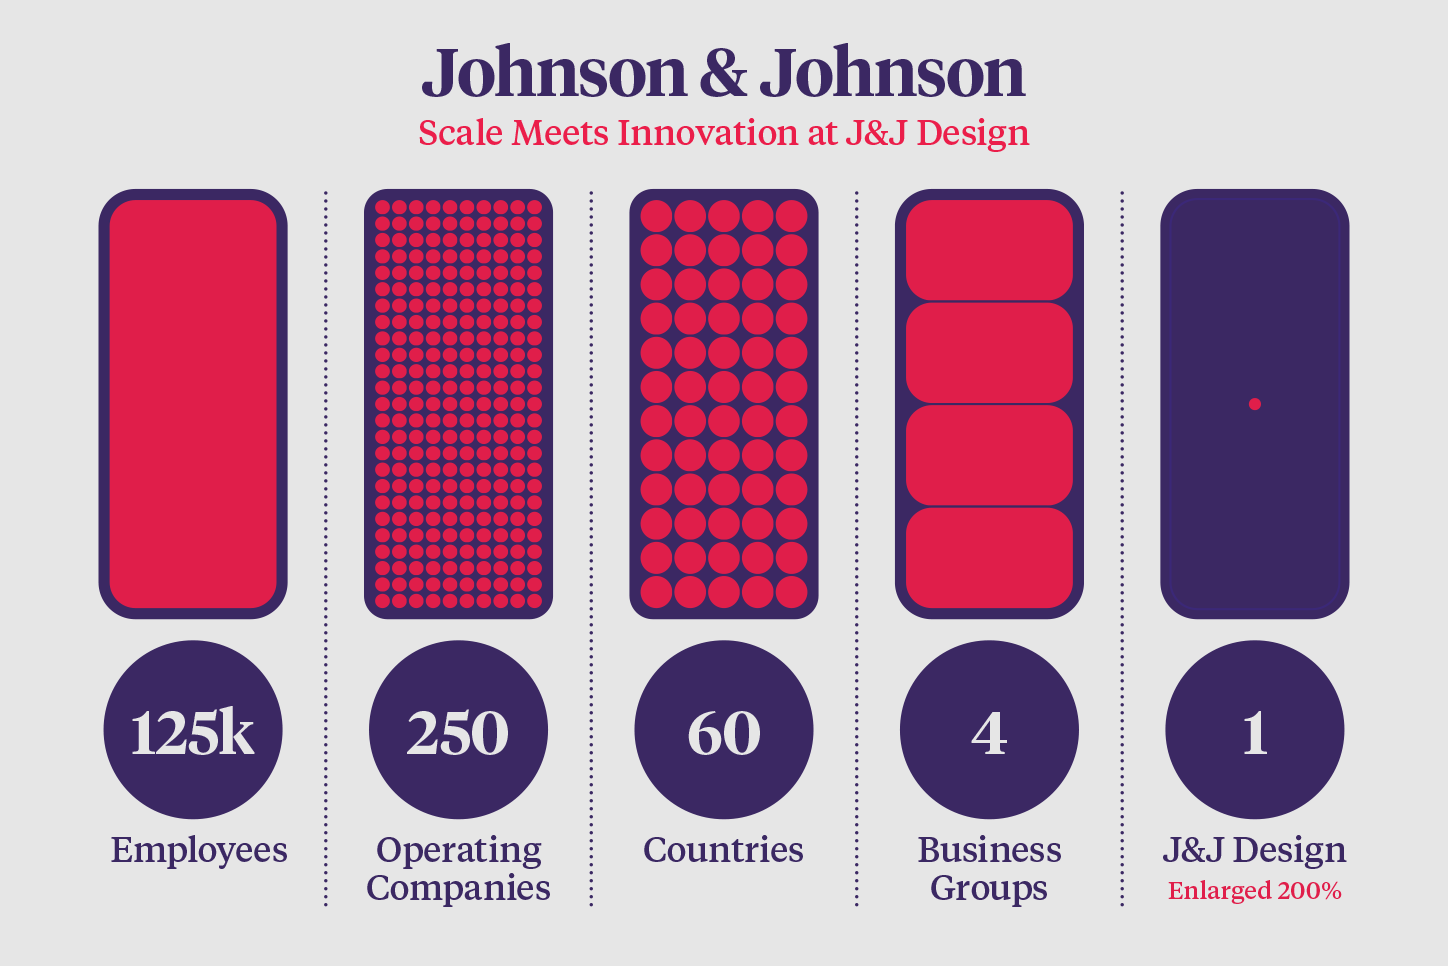 Johnson & Johnson: J&J Design